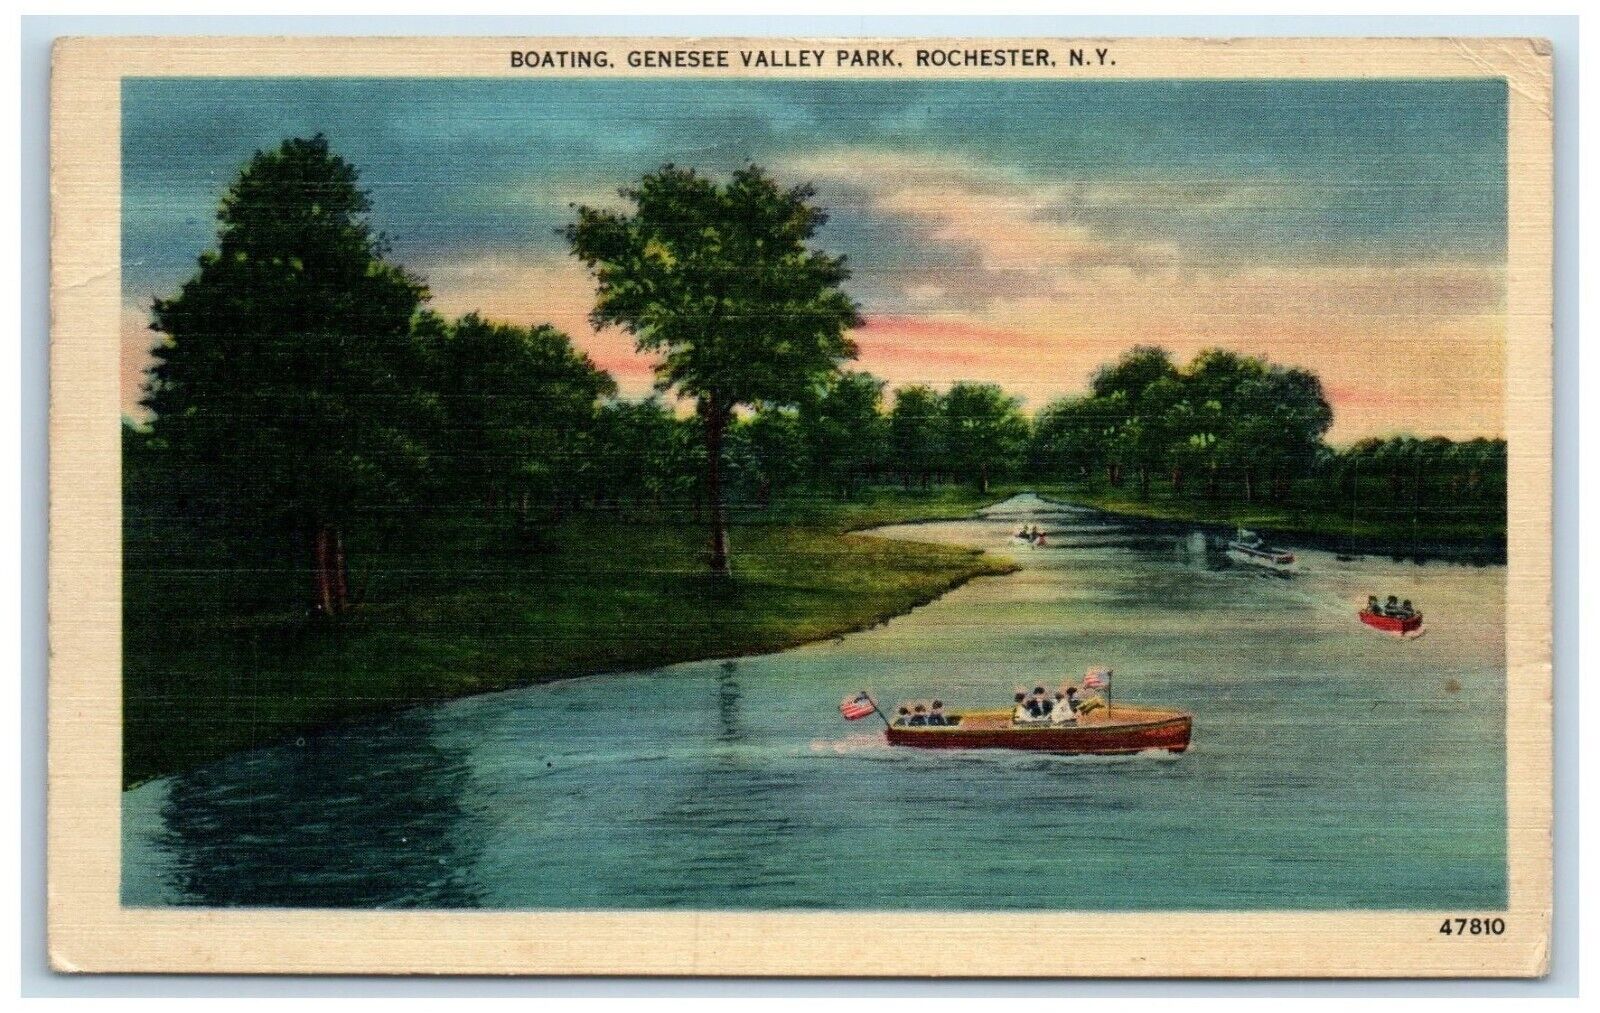 c1940 Boating Genesee Valley Park Speedboat Rochester New York Vintage Postcard